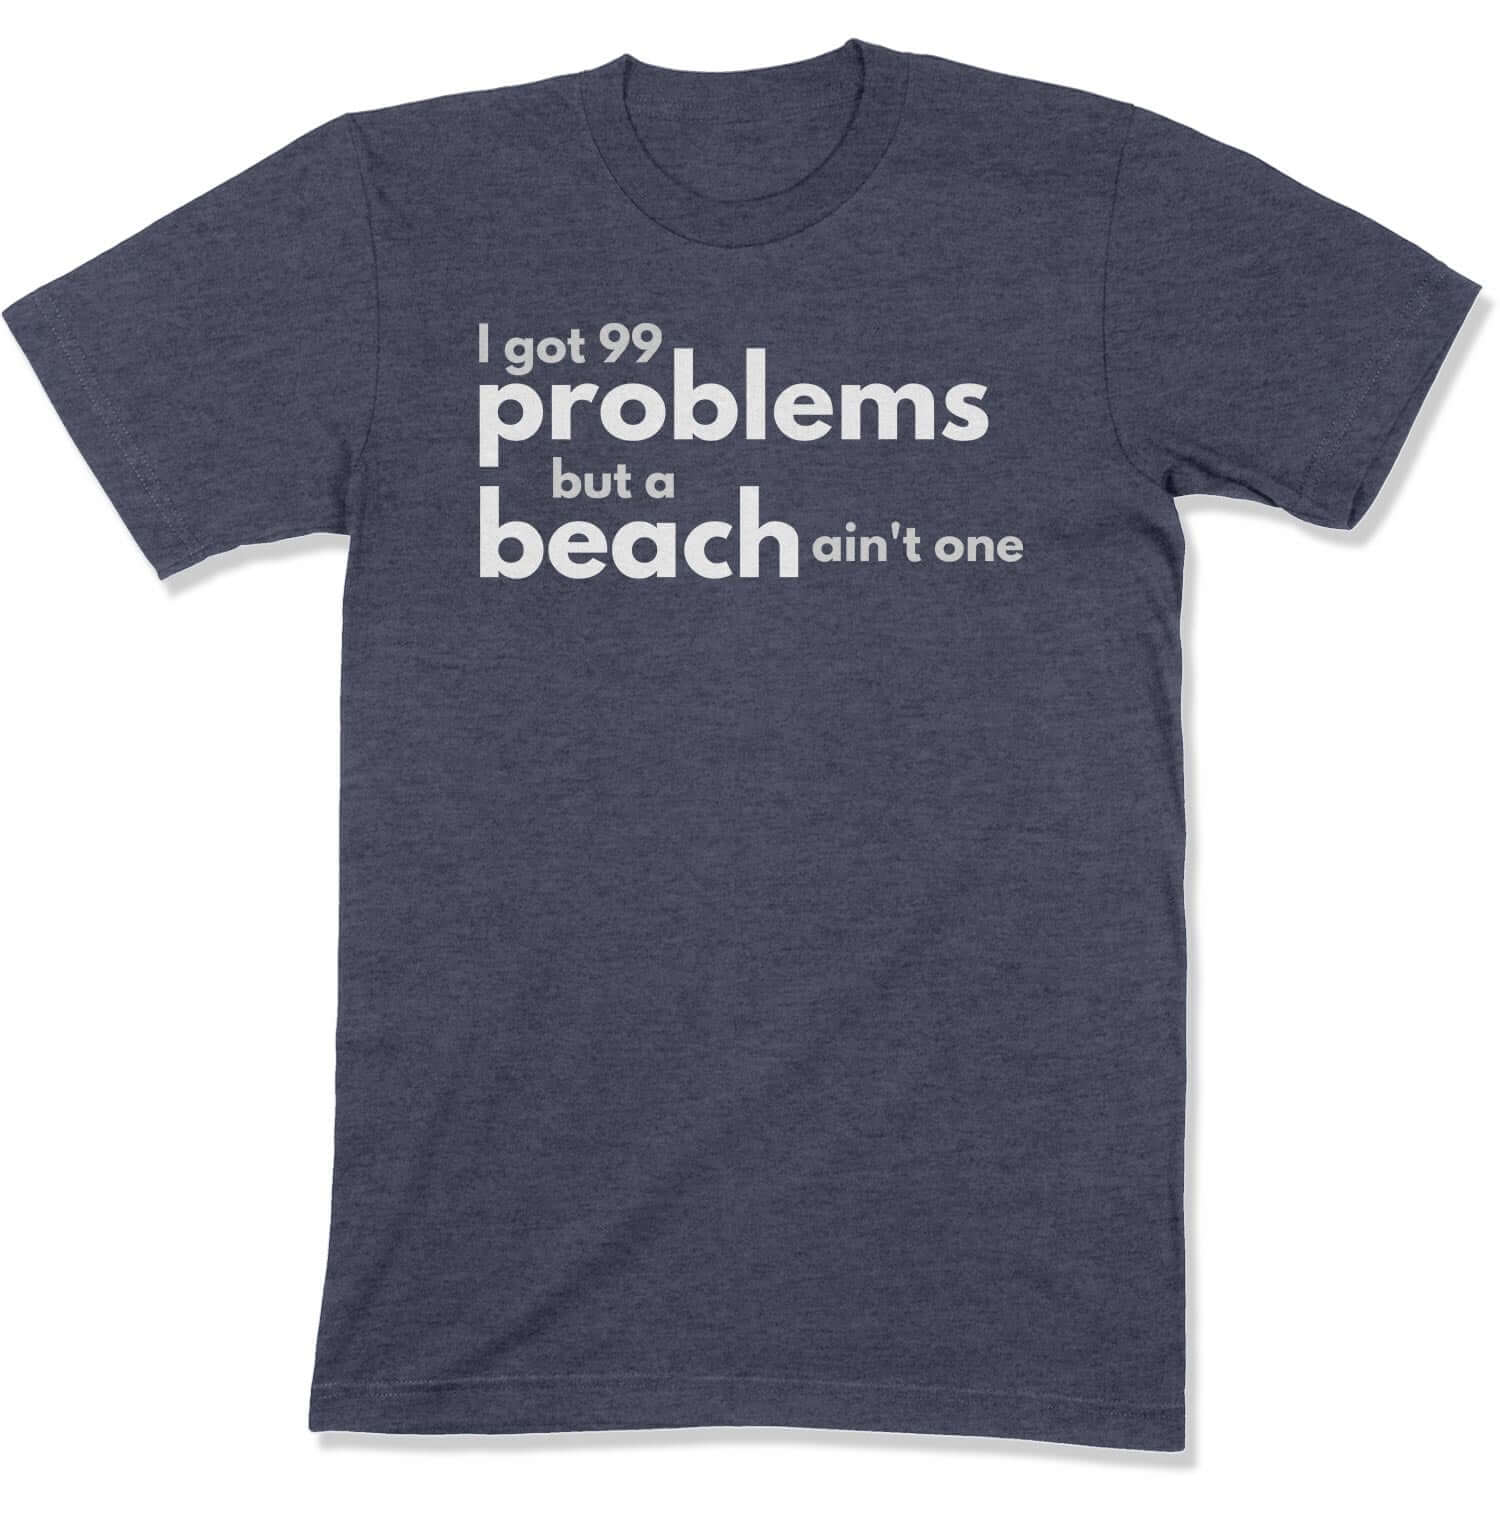 99 Problems Unisex T-Shirt in Color: Heather Navy - East Coast AF Apparel